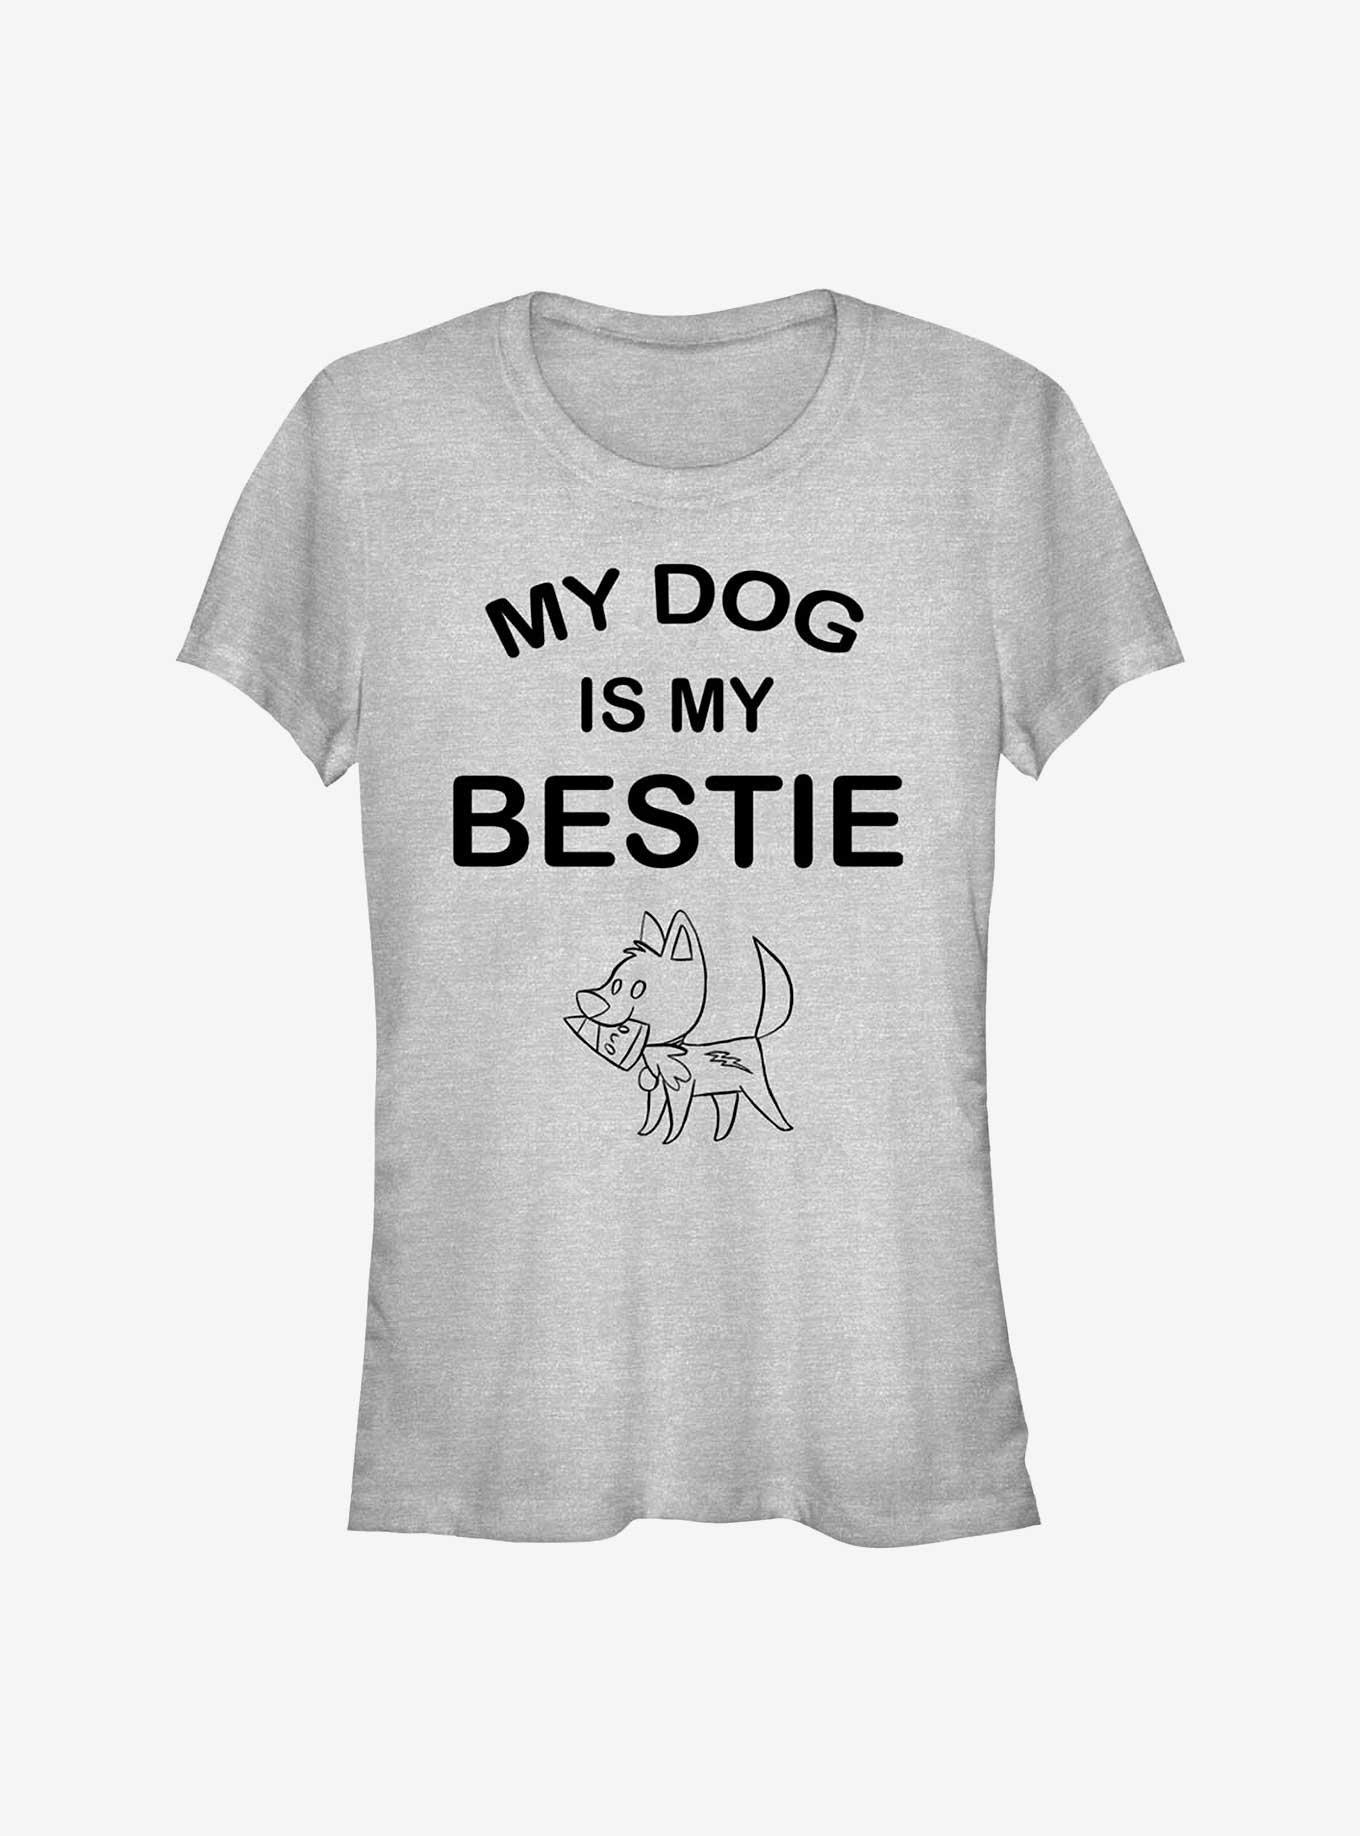 Disney Bolt Is My Bestie Girls T-Shirt